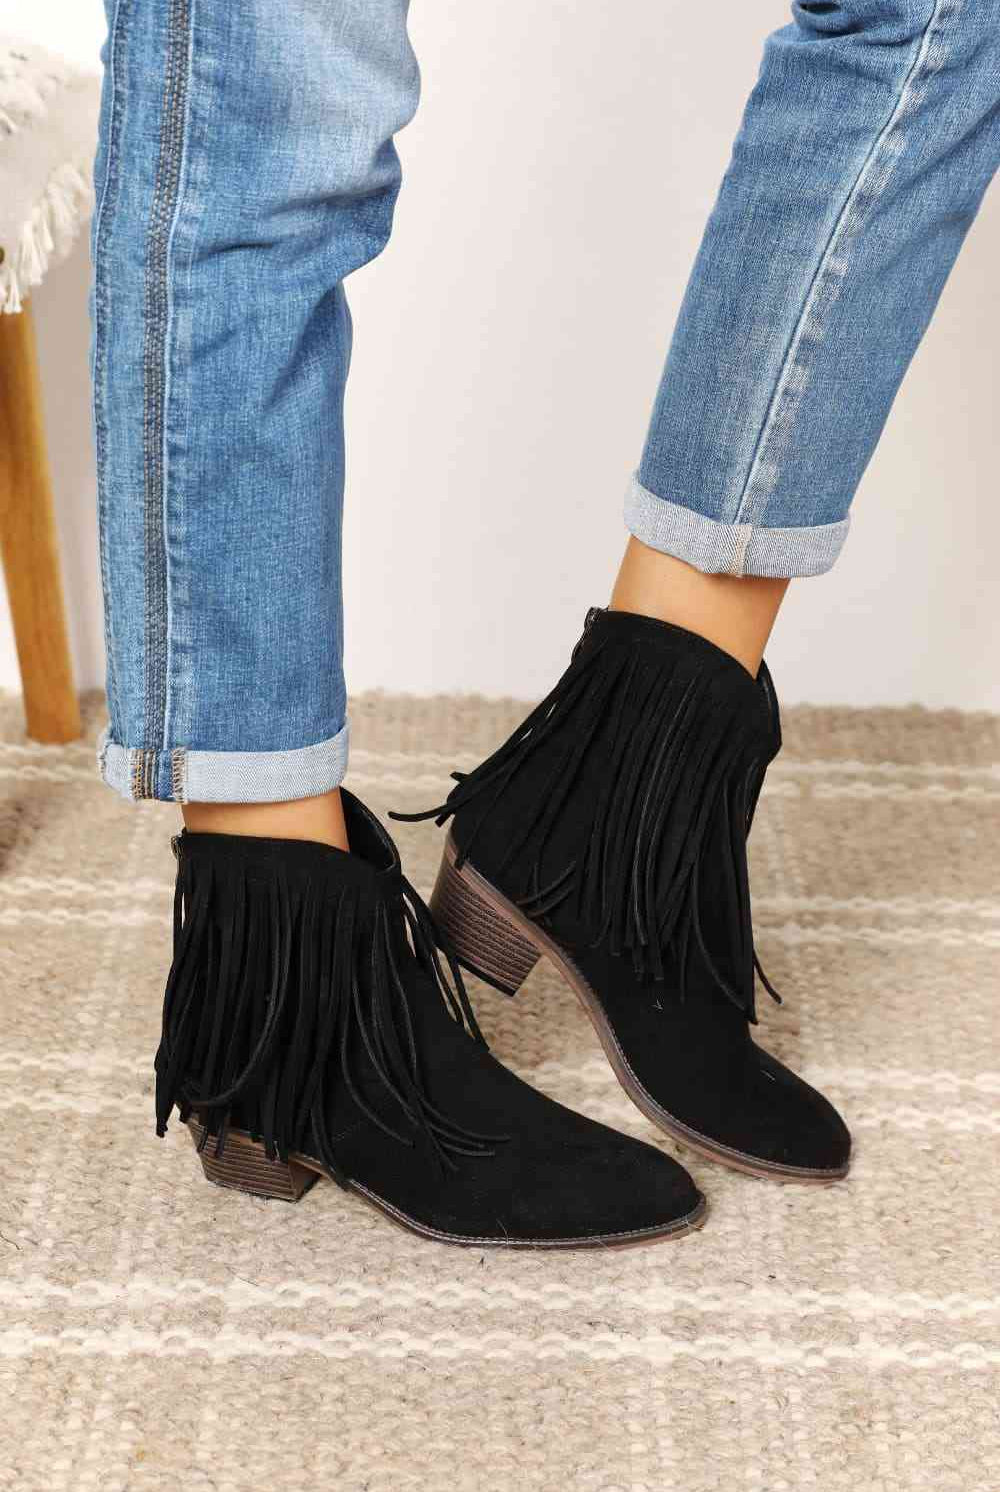 Gray Legend Women's Fringe Cowboy Western Ankle Boots Shoes